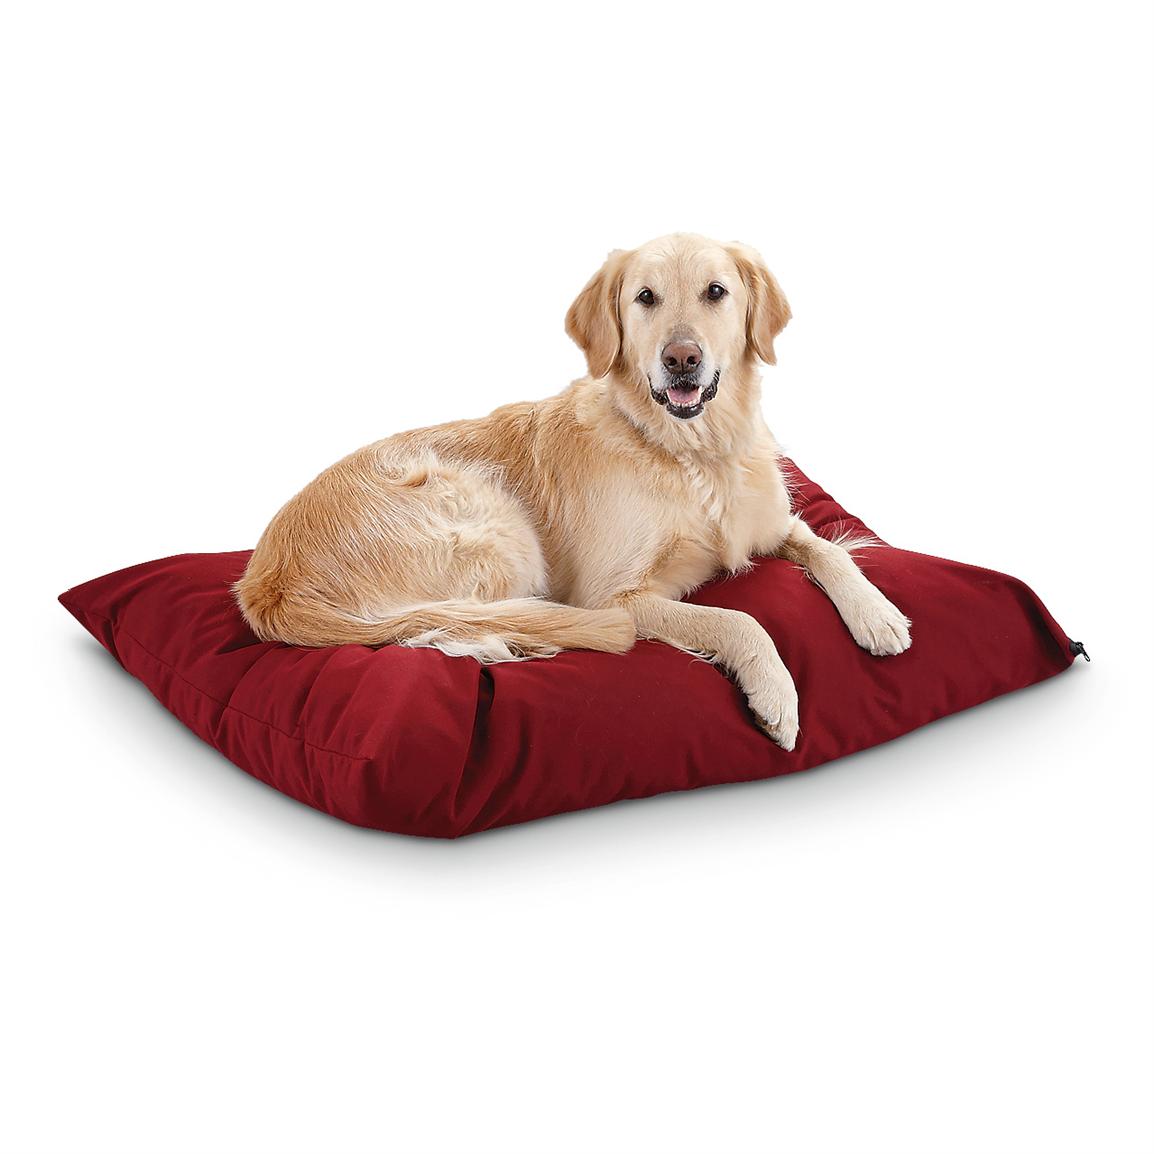 Premium Value 27" x 36" Dog Bed 158676, Kennels & Beds at Sportsman's Guide